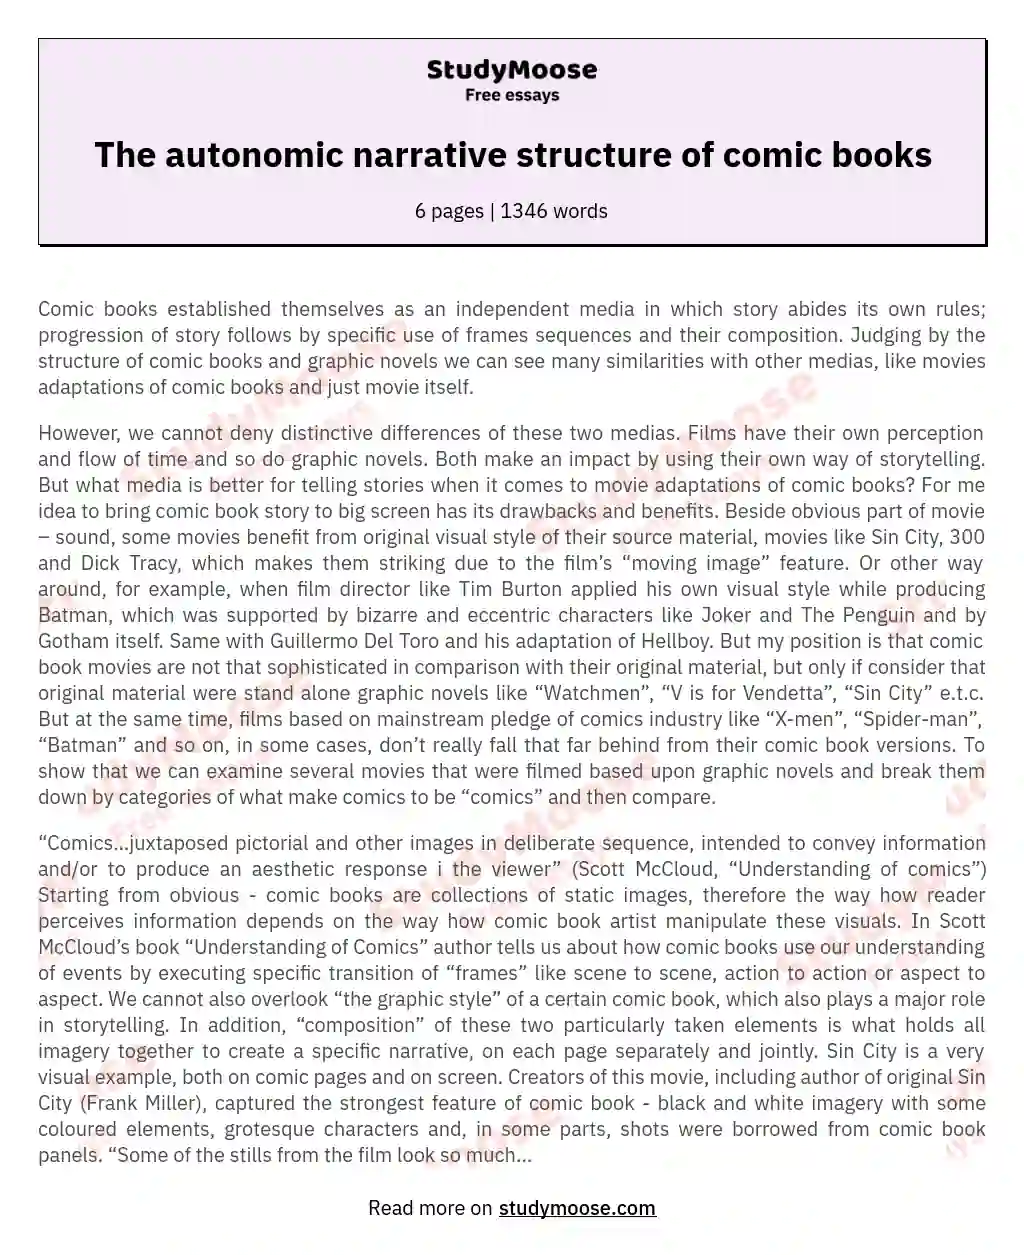 The autonomic narrative structure of comic books essay